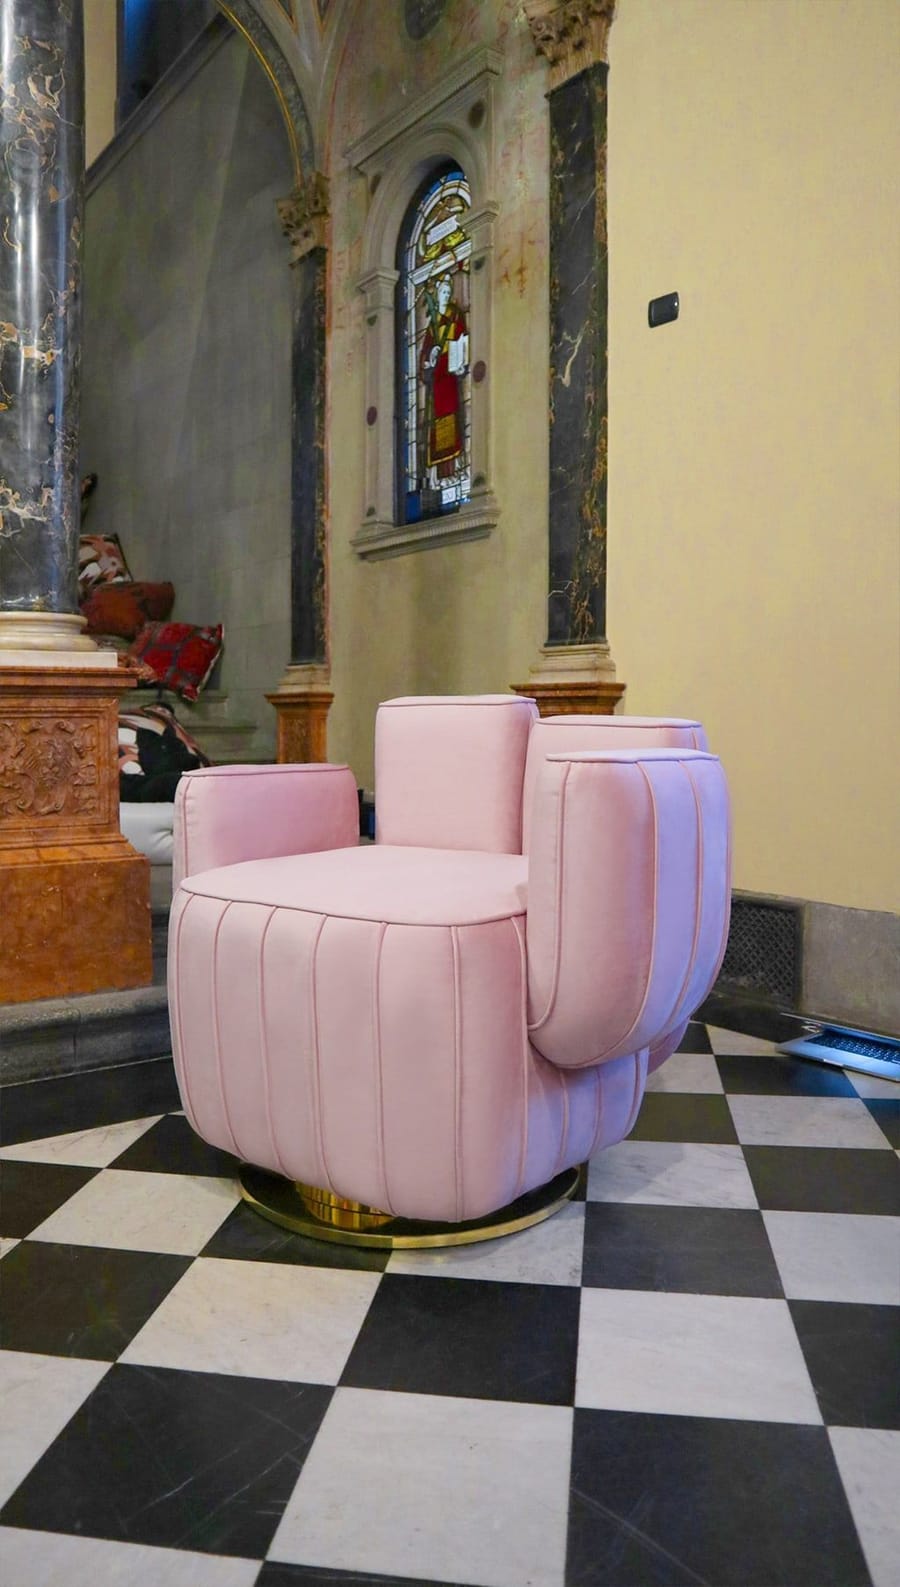 CHROMATIK HOUSE armchair by HOMMÉS Studio, as featured at Milan Design Week 2022.